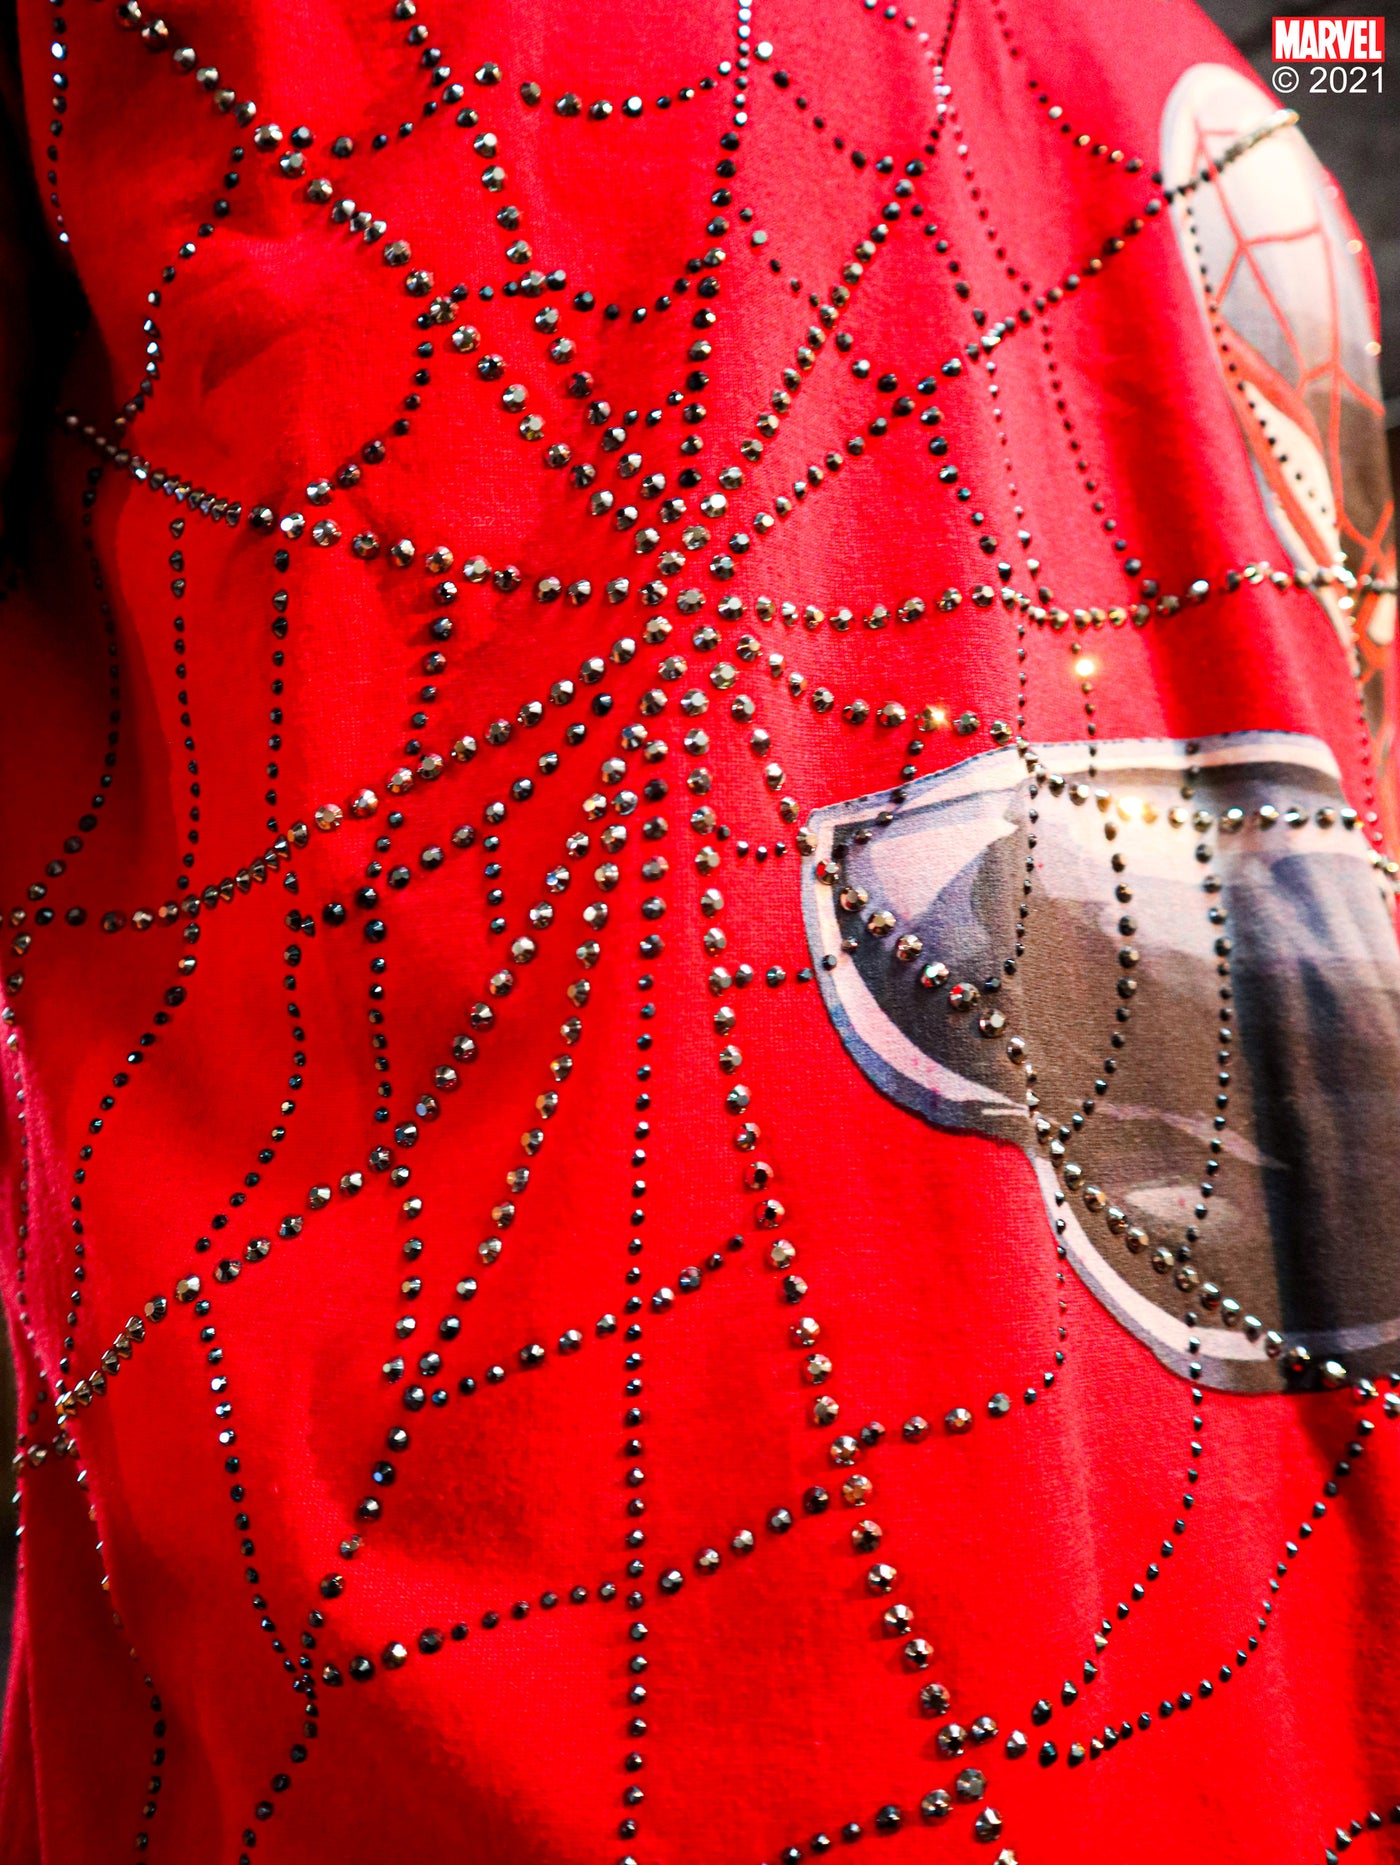 deKryptic x Marvel© x Spider-Man: Web Slinger Rhinestone Red T-Shirt